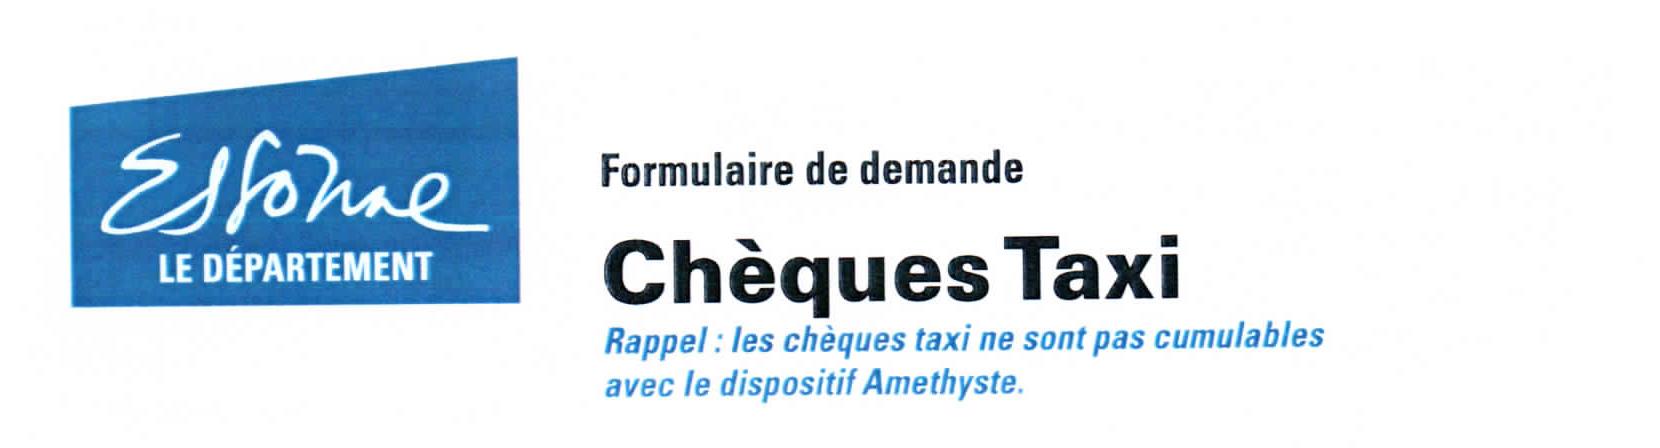 Cheque taxi.jpg